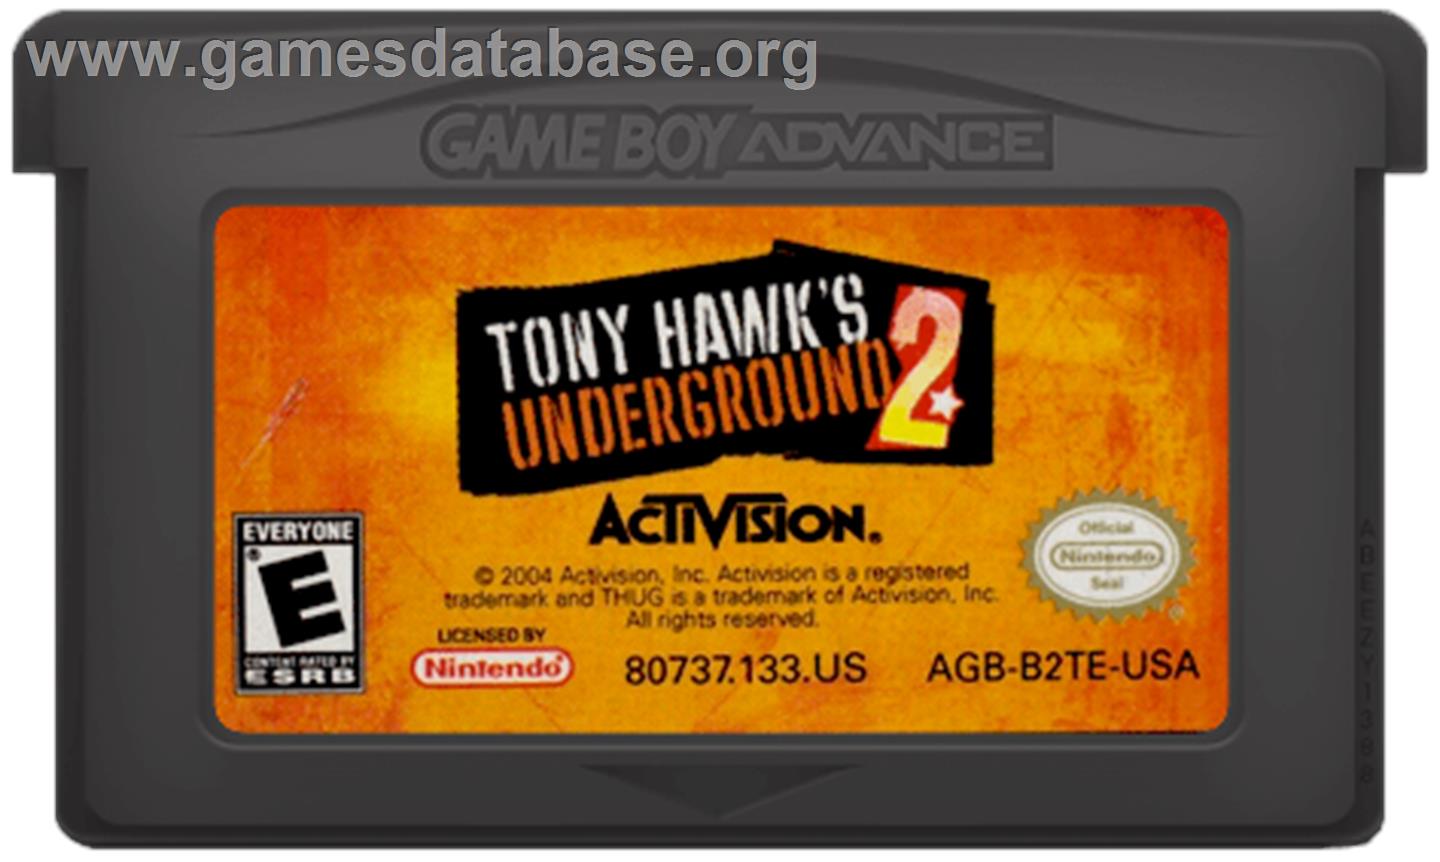 Tony Hawk's Underground 2 - Nintendo Game Boy Advance - Artwork - Cartridge